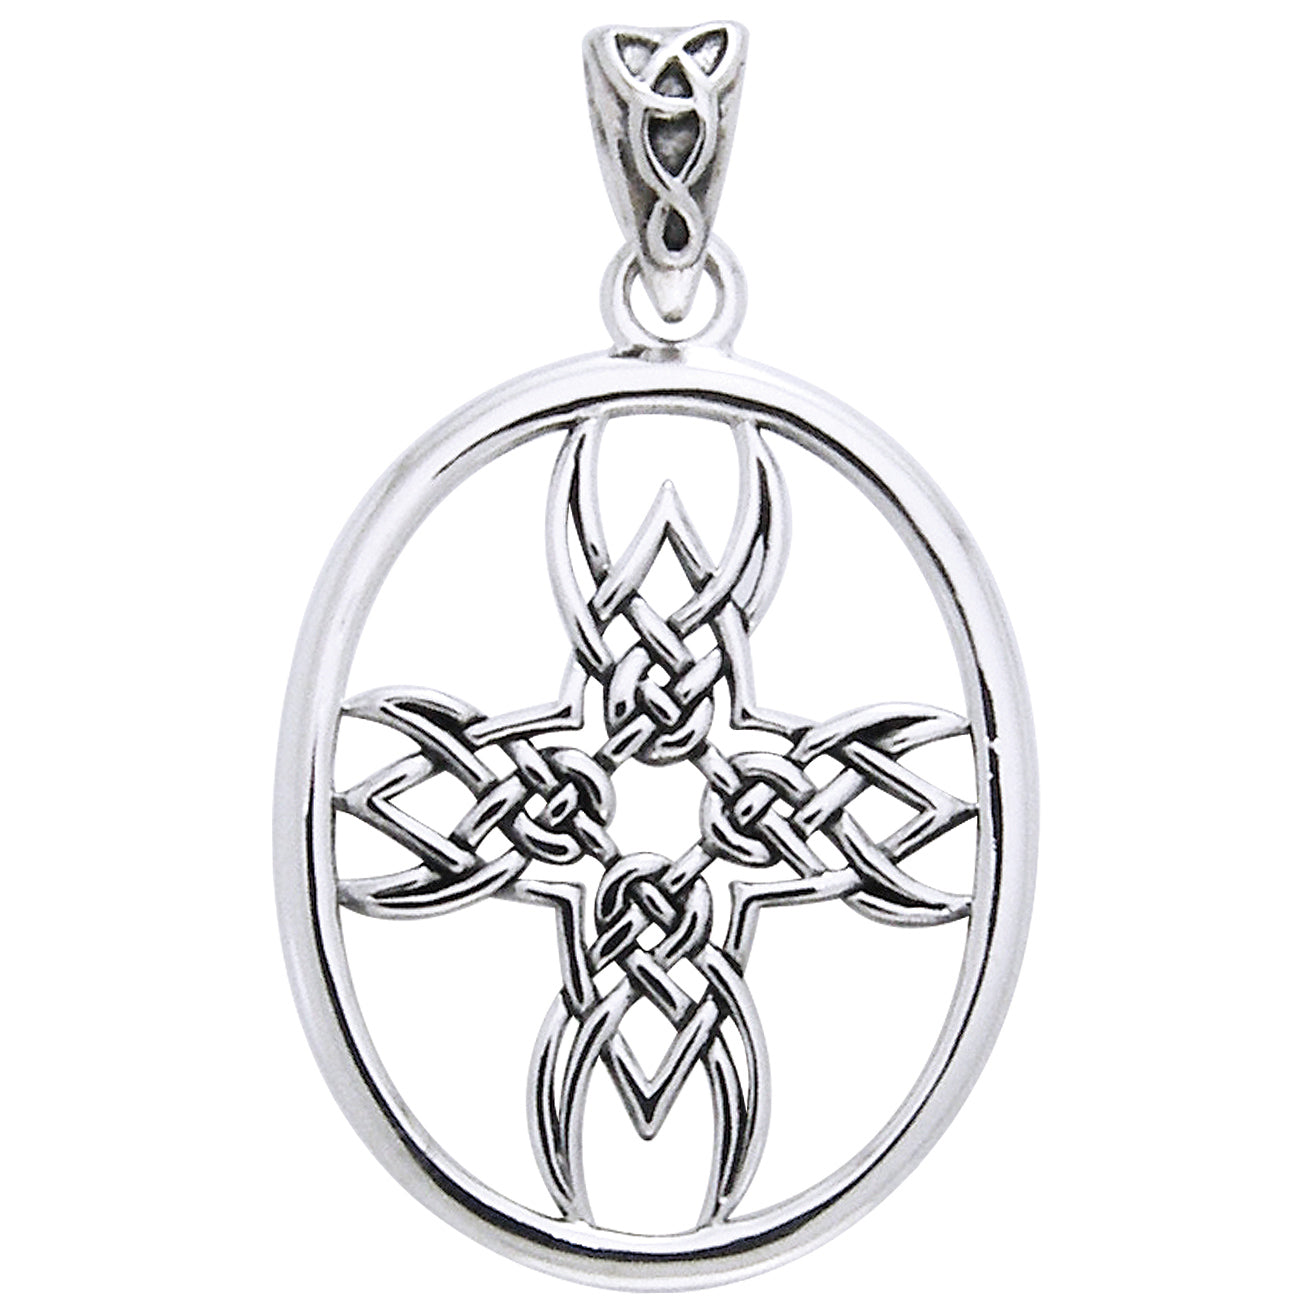 Tribal Cross Symbol Celtic Knotwork Sterling Silver Pendant by Courtney Davis - Silver Insanity